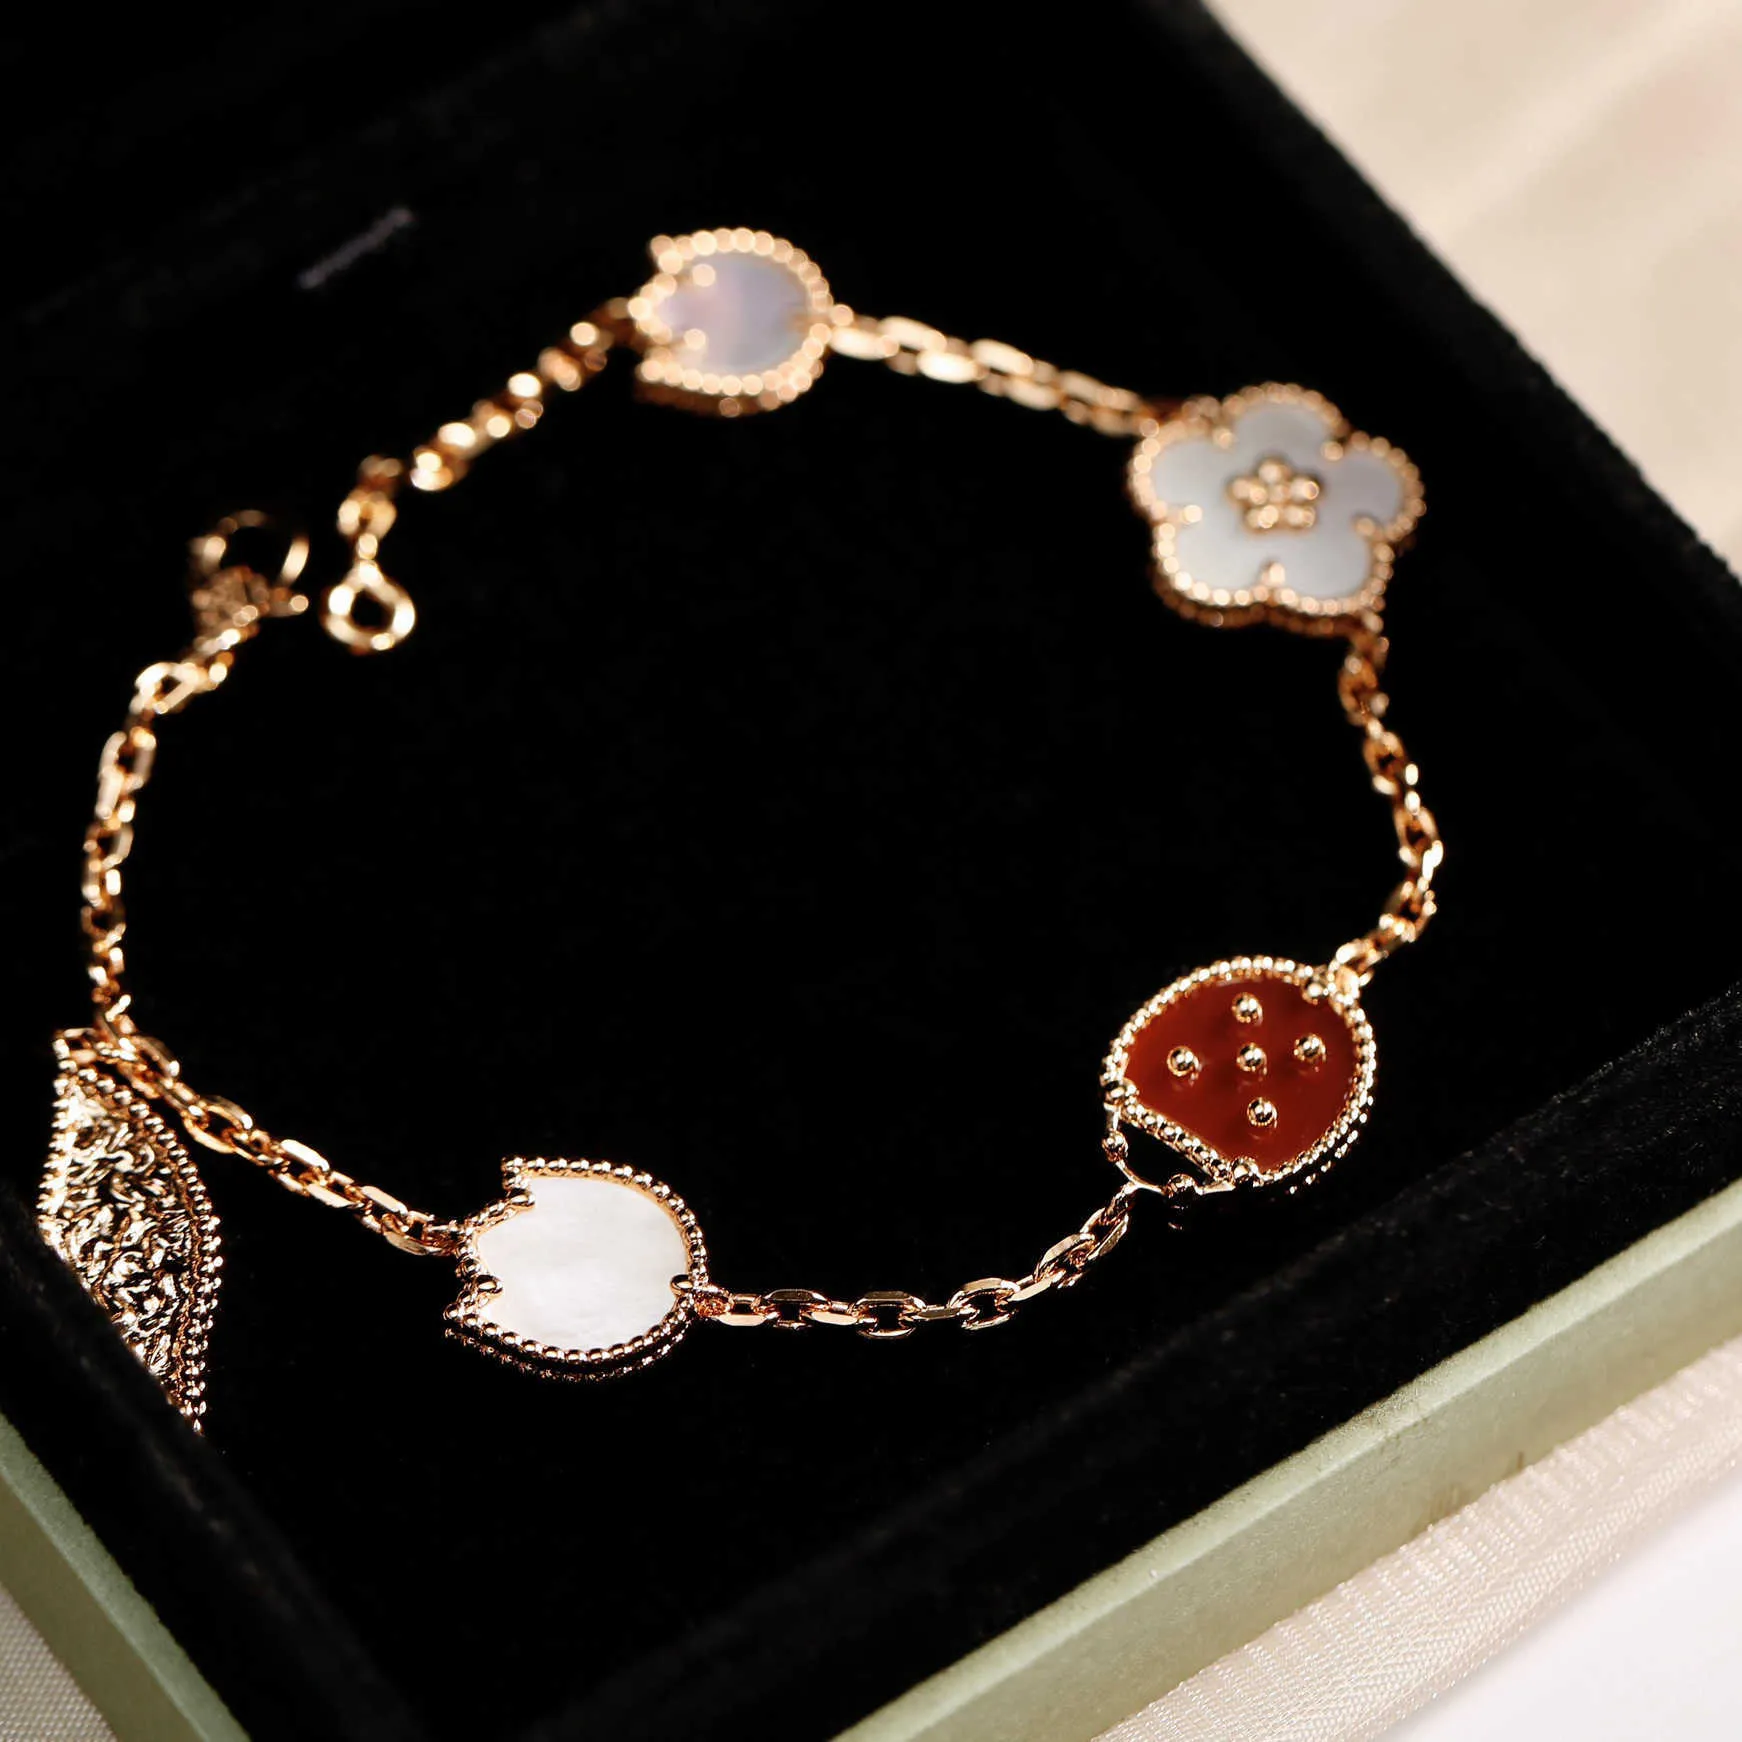 Choix de cadeau de bracelet haut standard Golden Lucky Sept Star Ladybug Bracelet Flower Agate avec Vnain commun